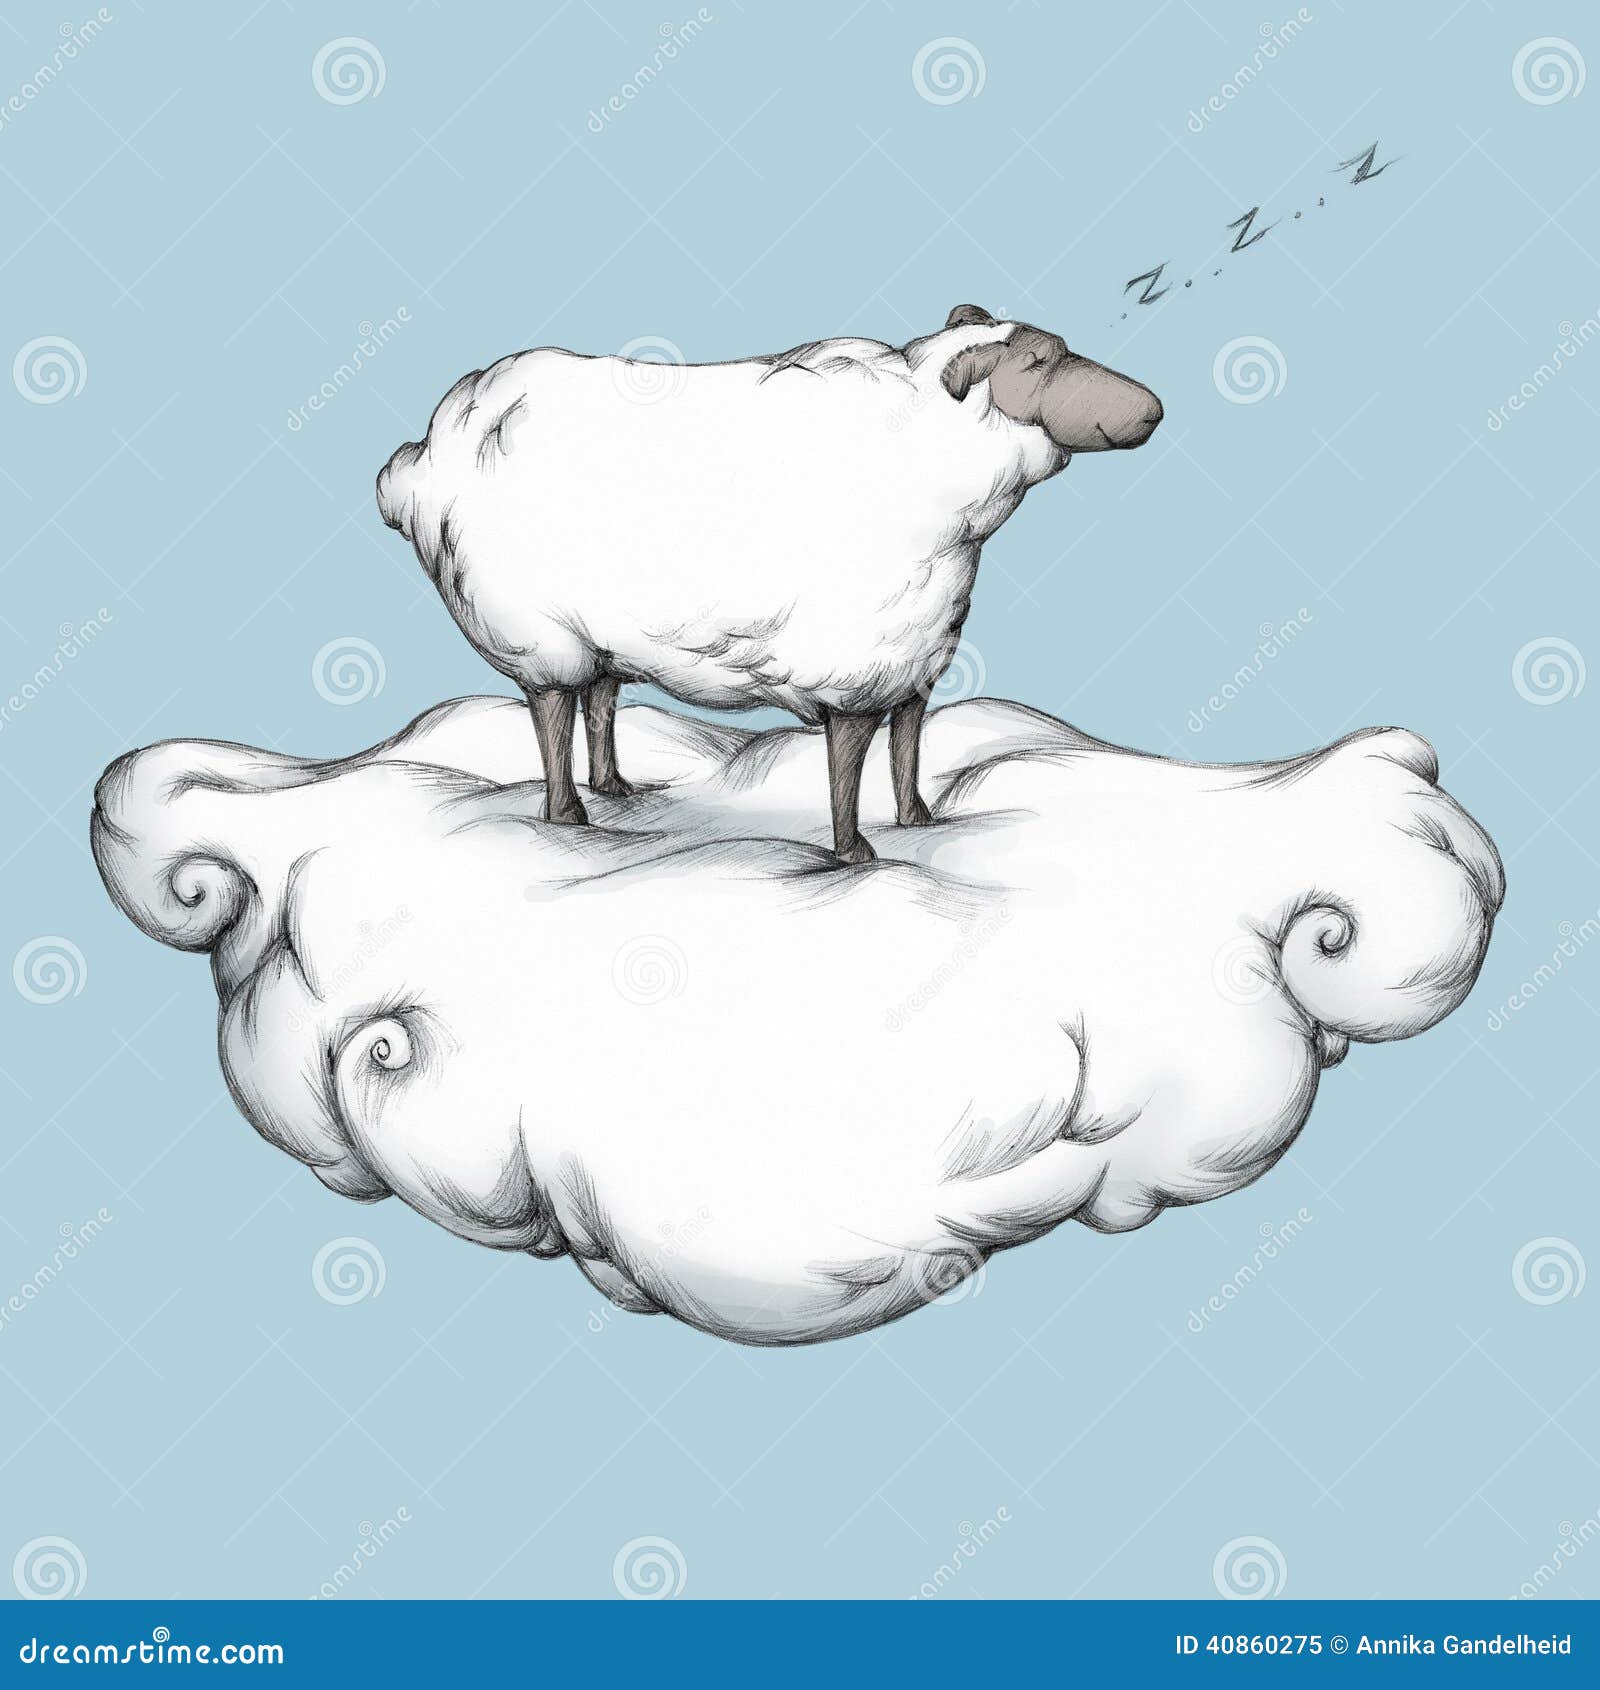 Sleeping sheep on a cloud stock illustration. Illustration of wool 